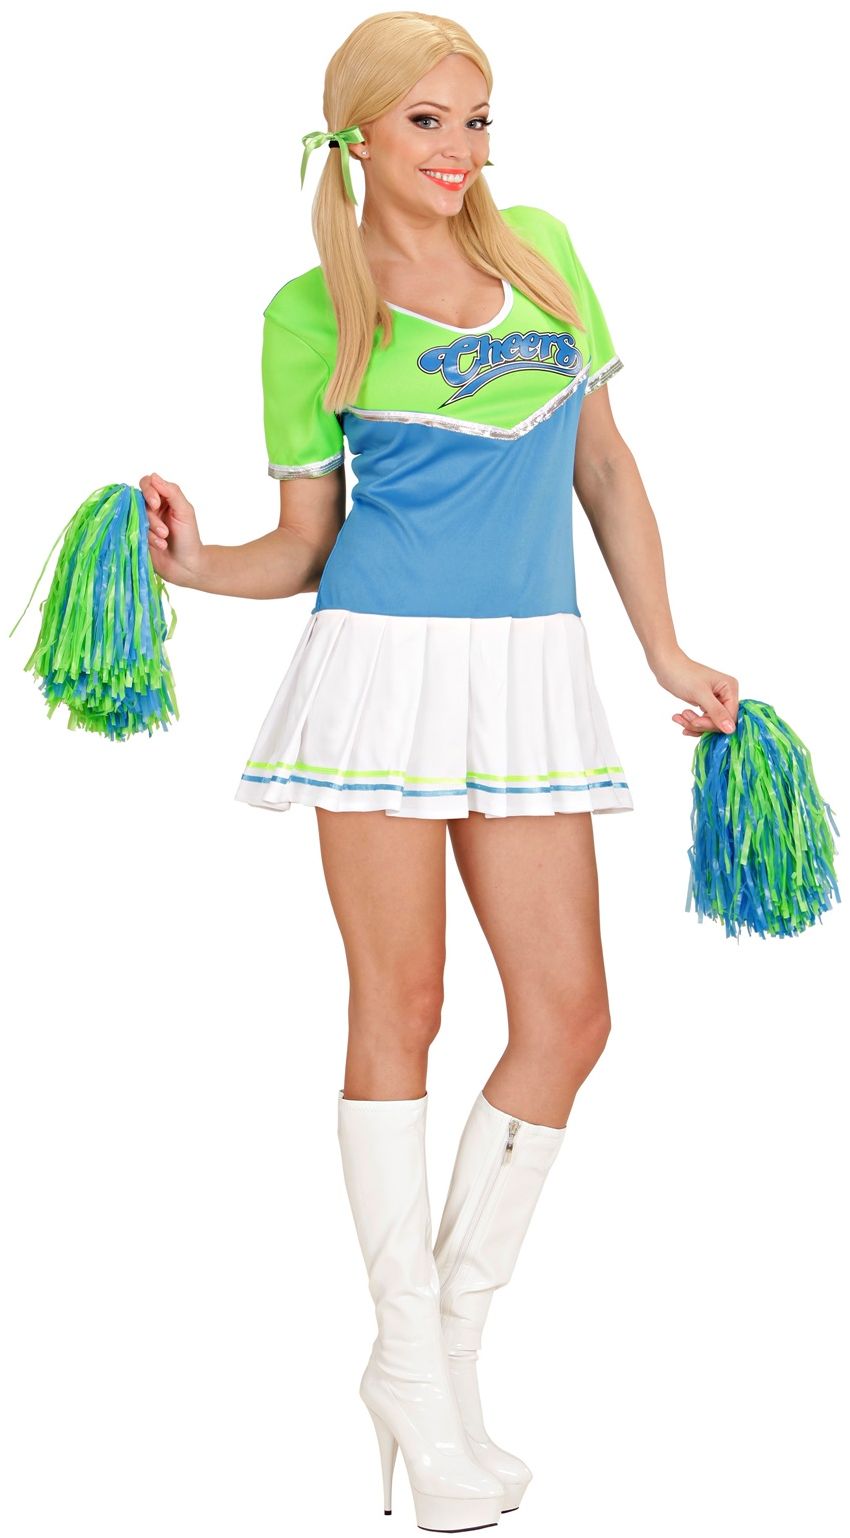 Cheerleader outfit dames blauw groen